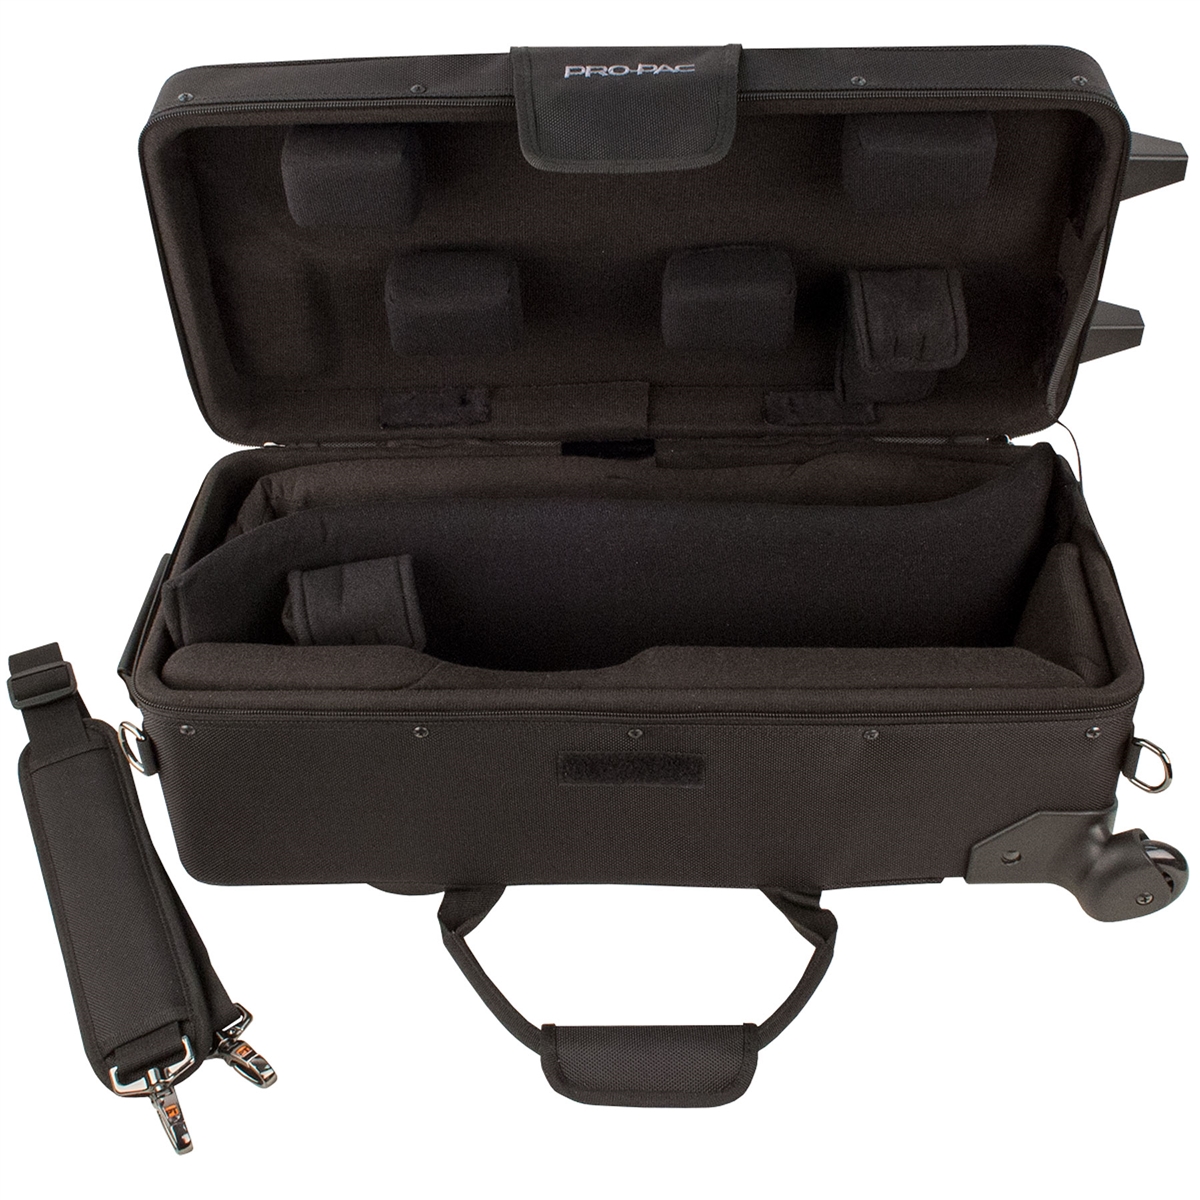 Protec Koffer - 2 Trompeten - IP 301DWL (mit Rädern)